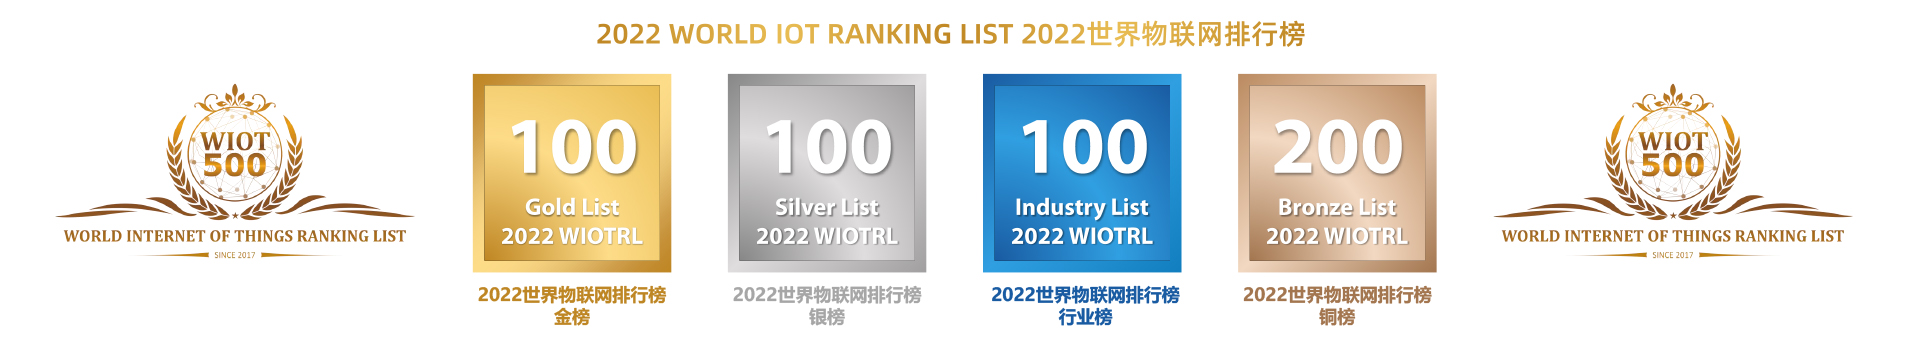 2022 World IoT Ranking List Top 500 Released